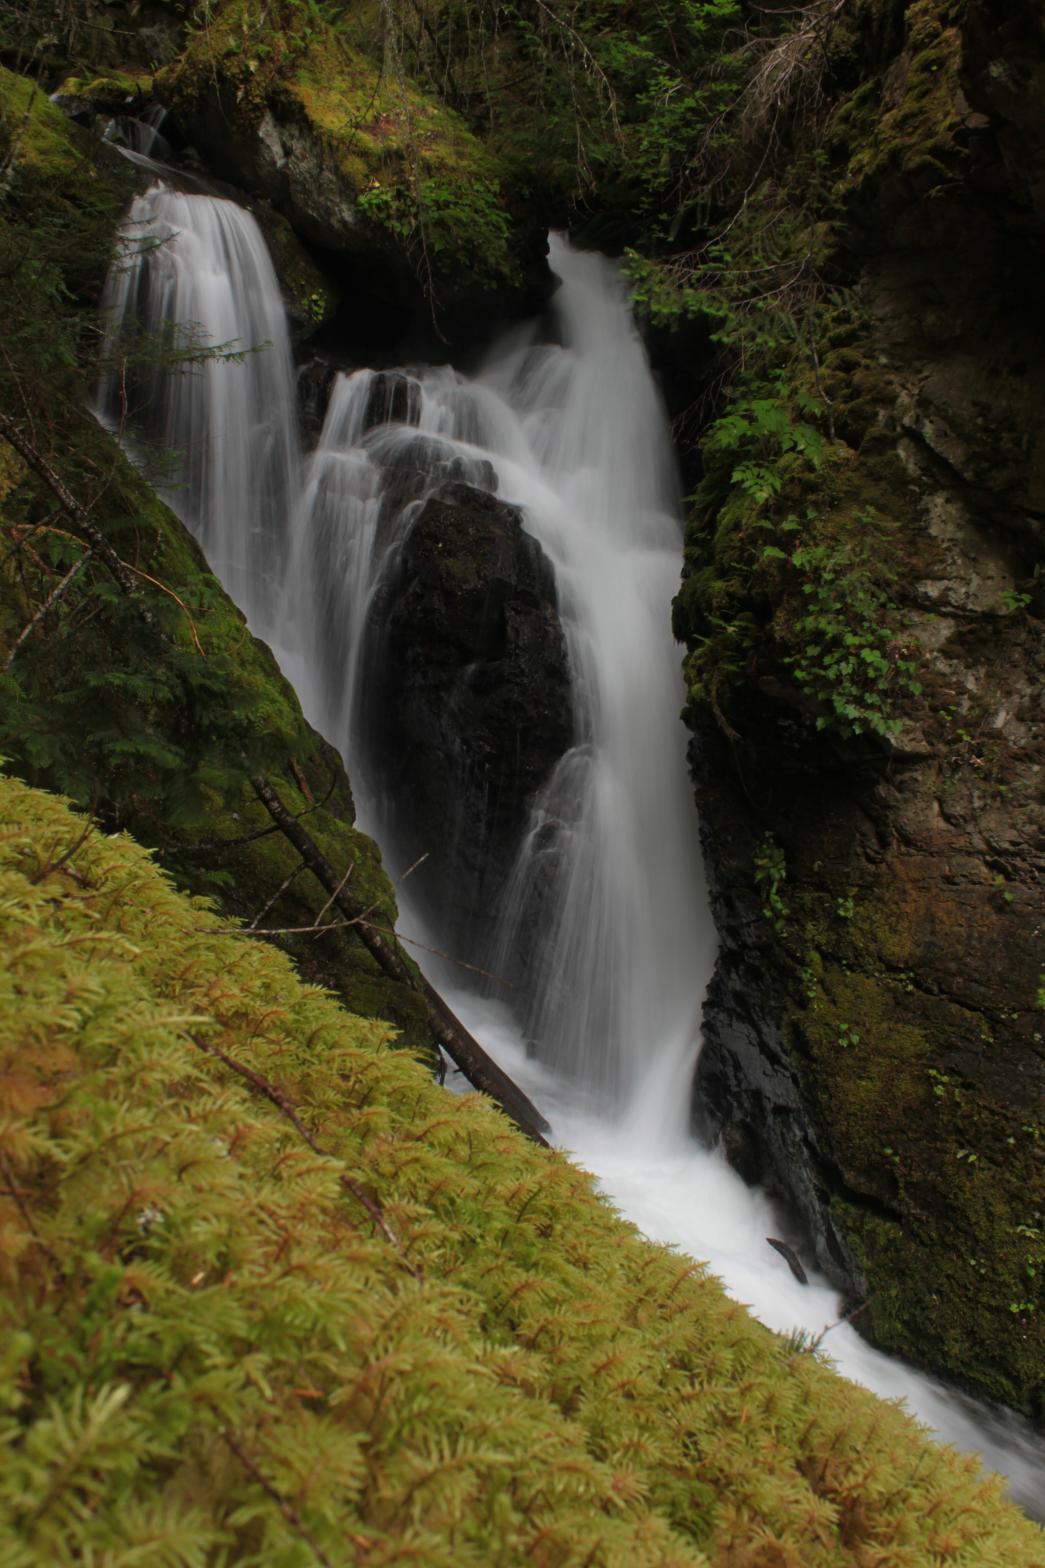 Third tier of Lower Sattler Falls